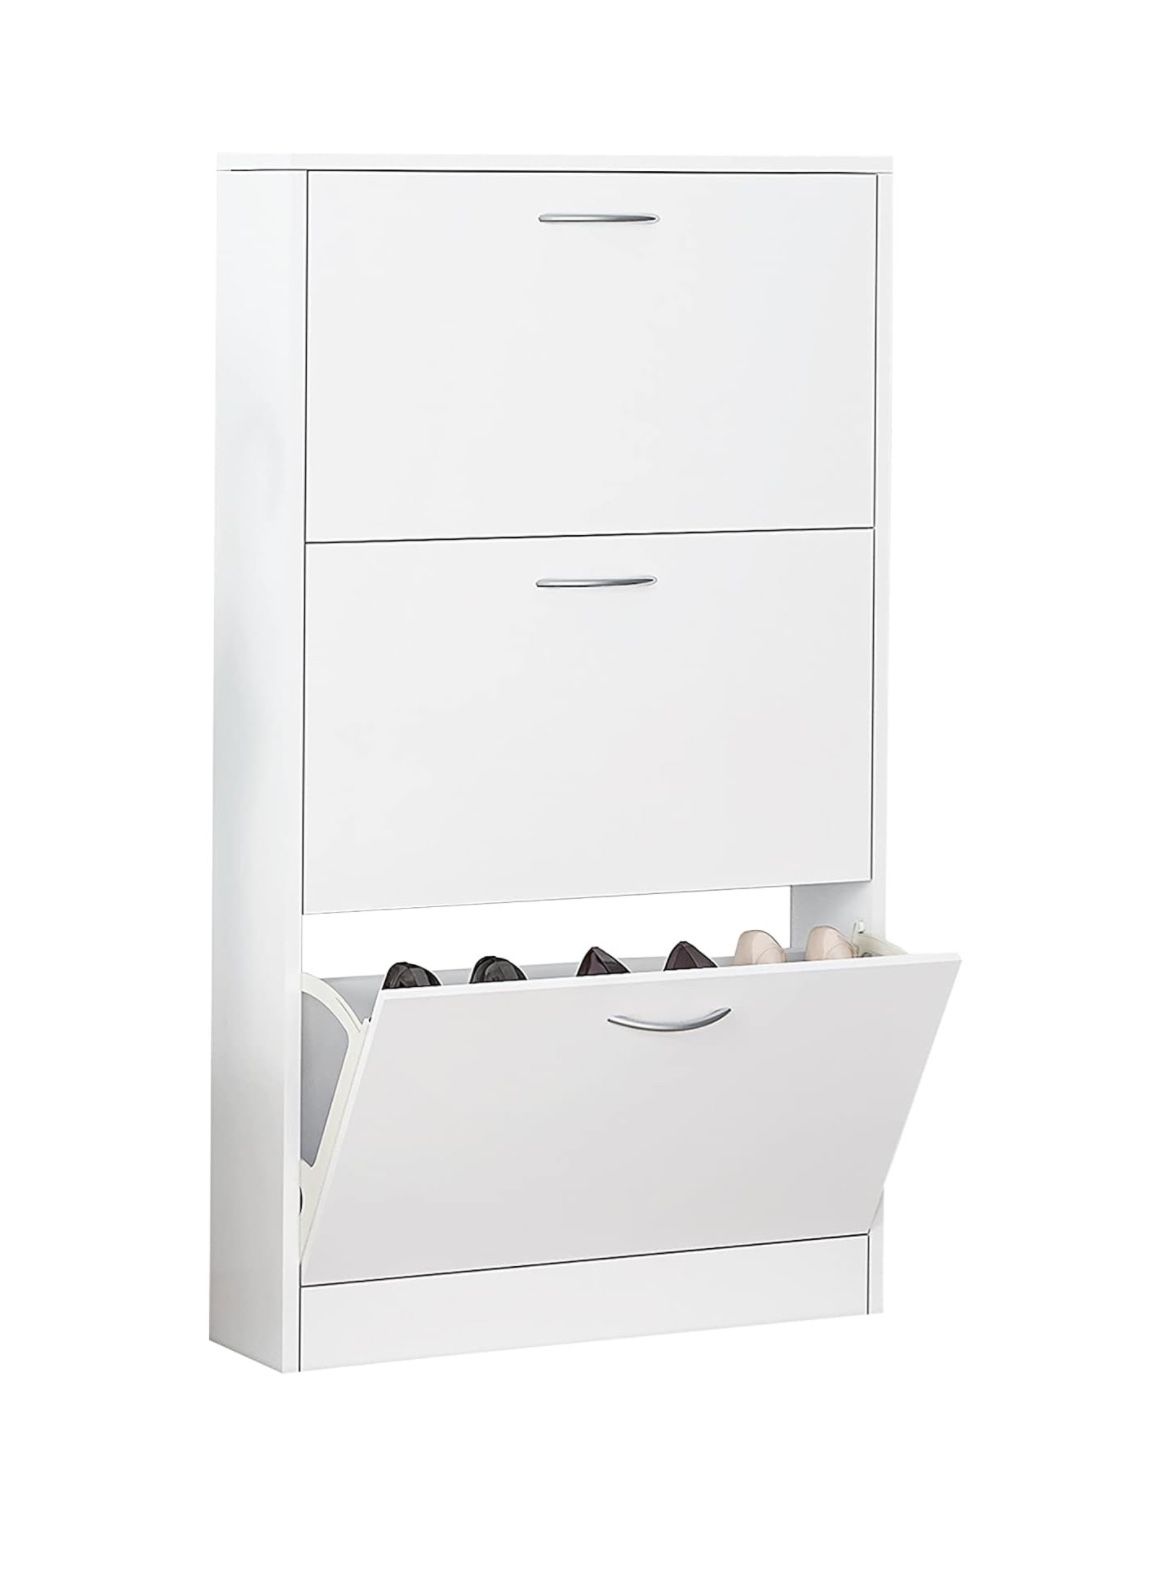 White Narrow Shoe Storage Cabinet - 3-Tier Freestanding Shoe Rack - 3 Flip Drawers Entryway Cupboard Organizer